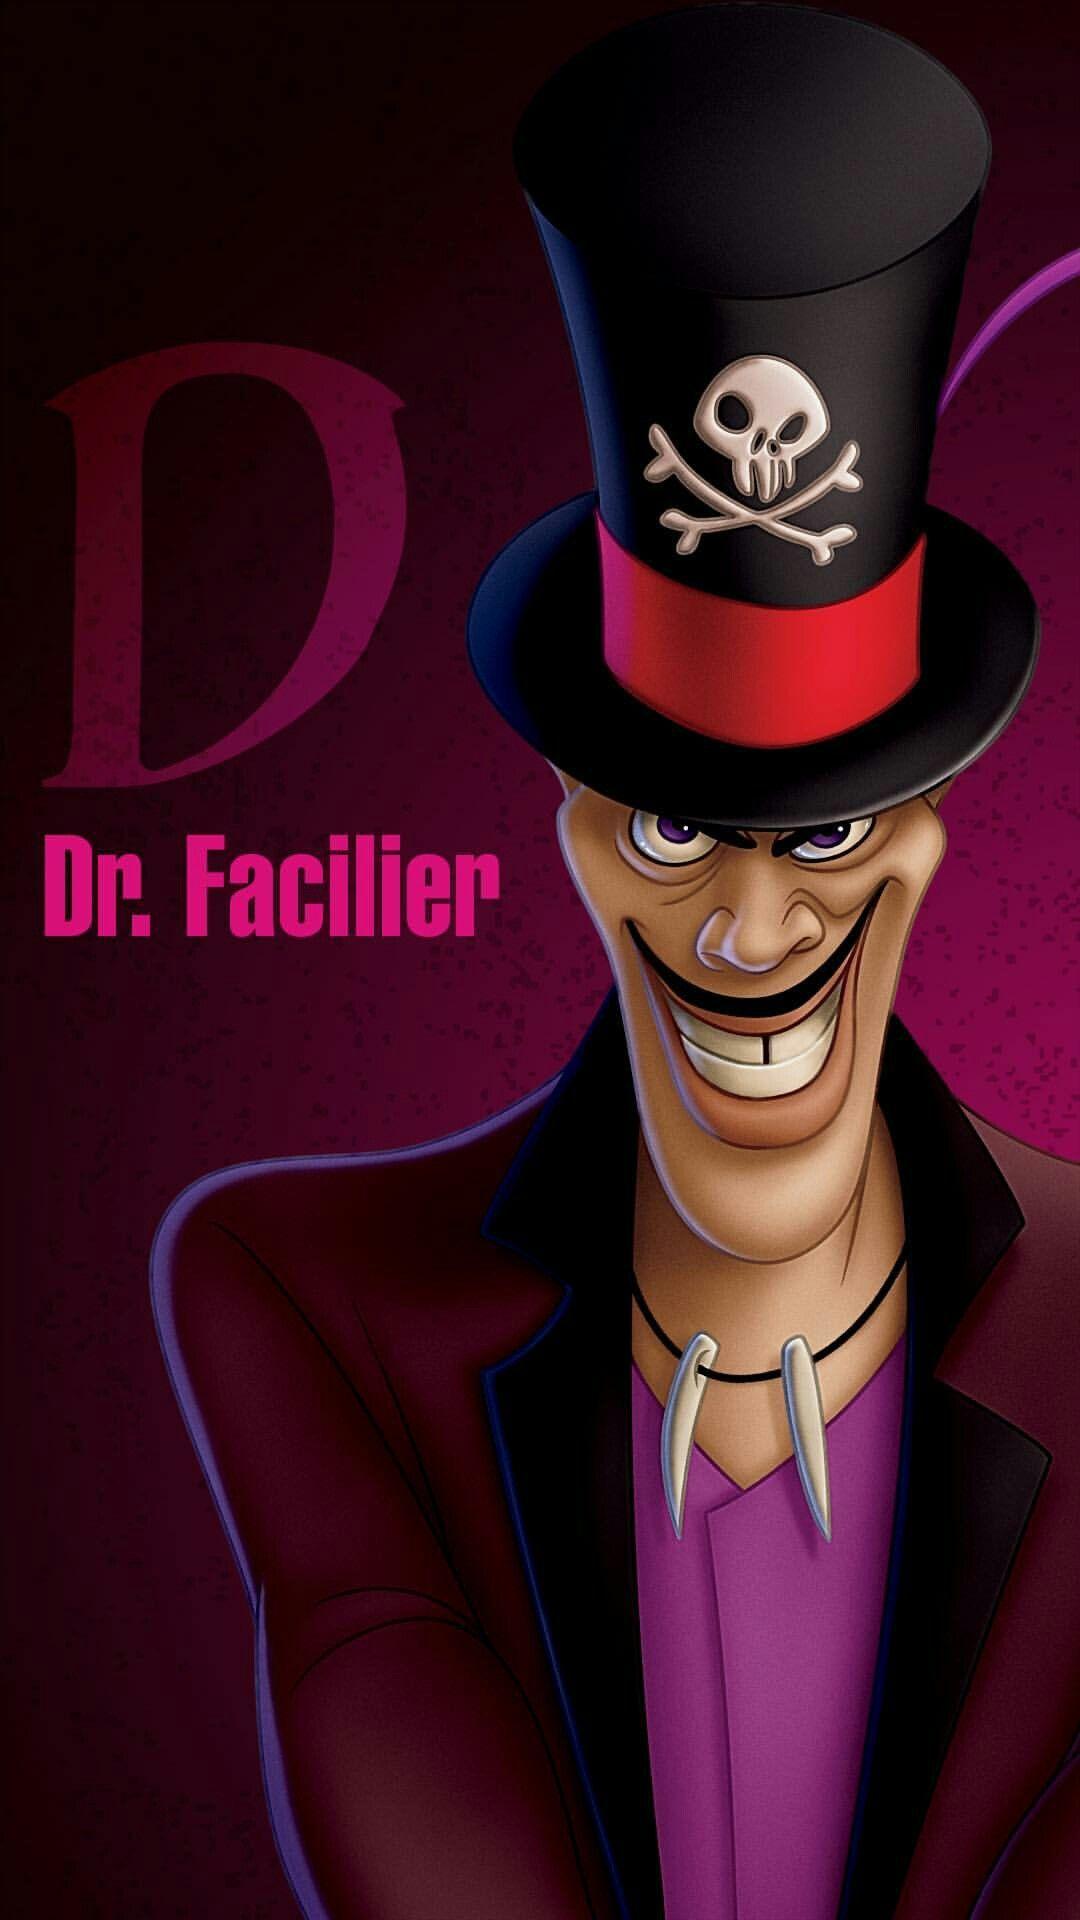 Dr. Facilier. Disney villains, Disney memes, Disney wallpaper